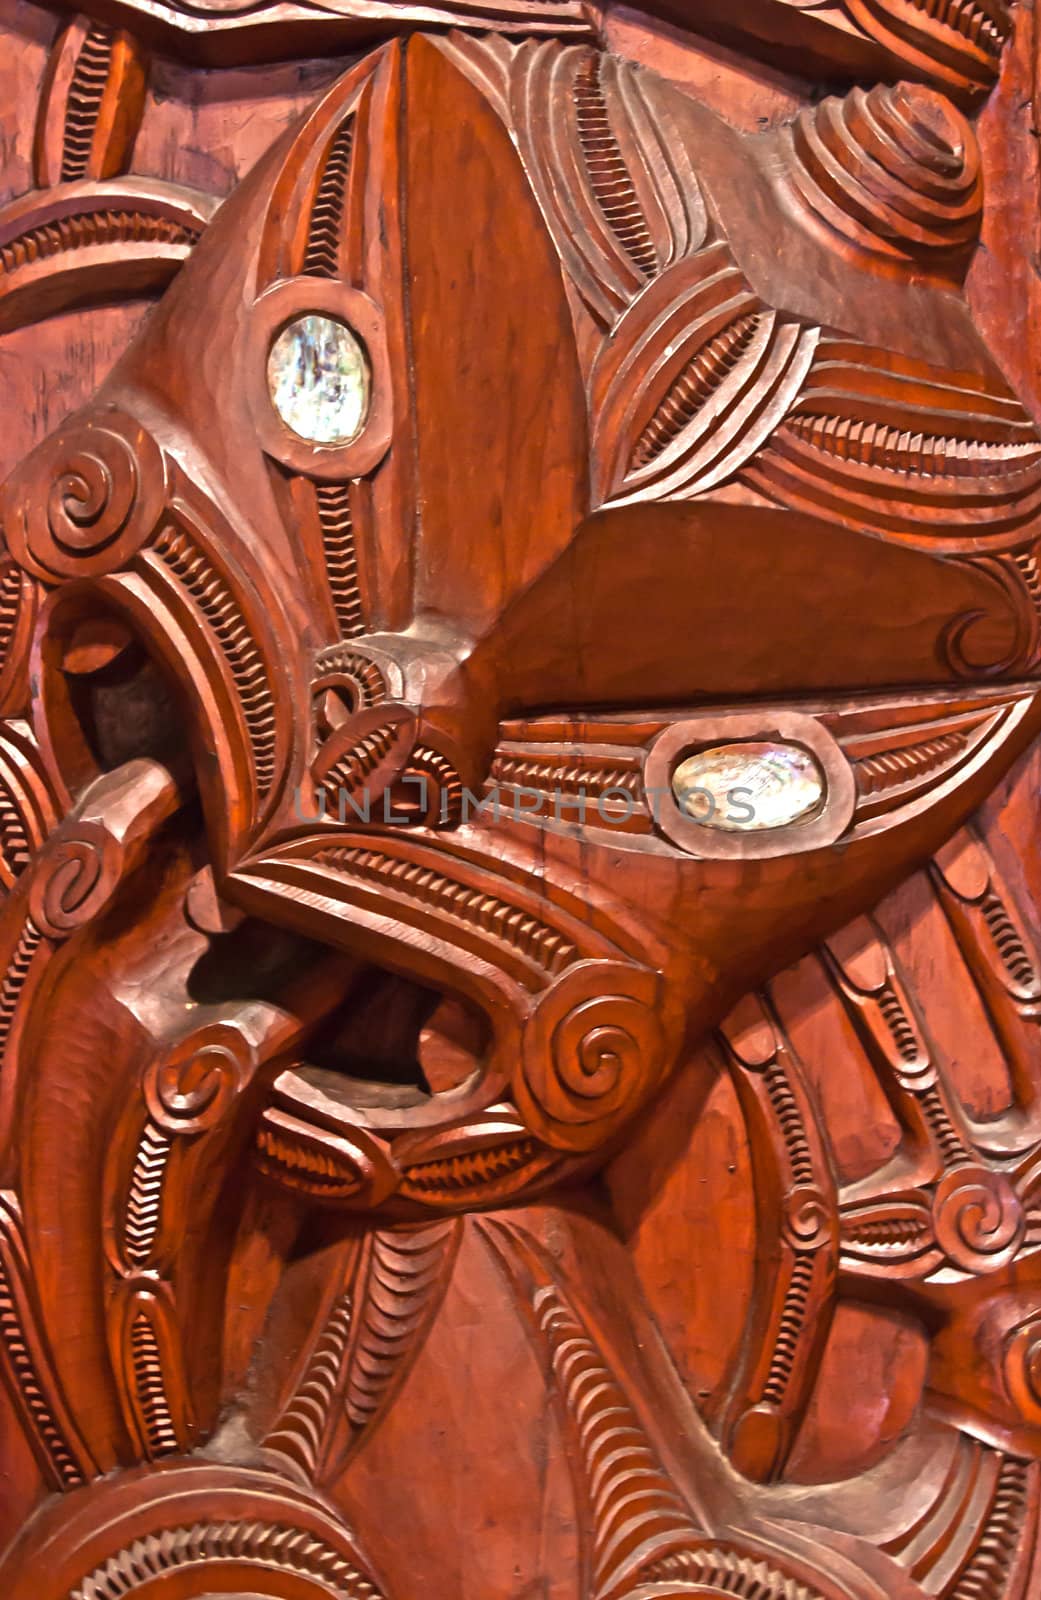 Maori Carving in New Zealand.